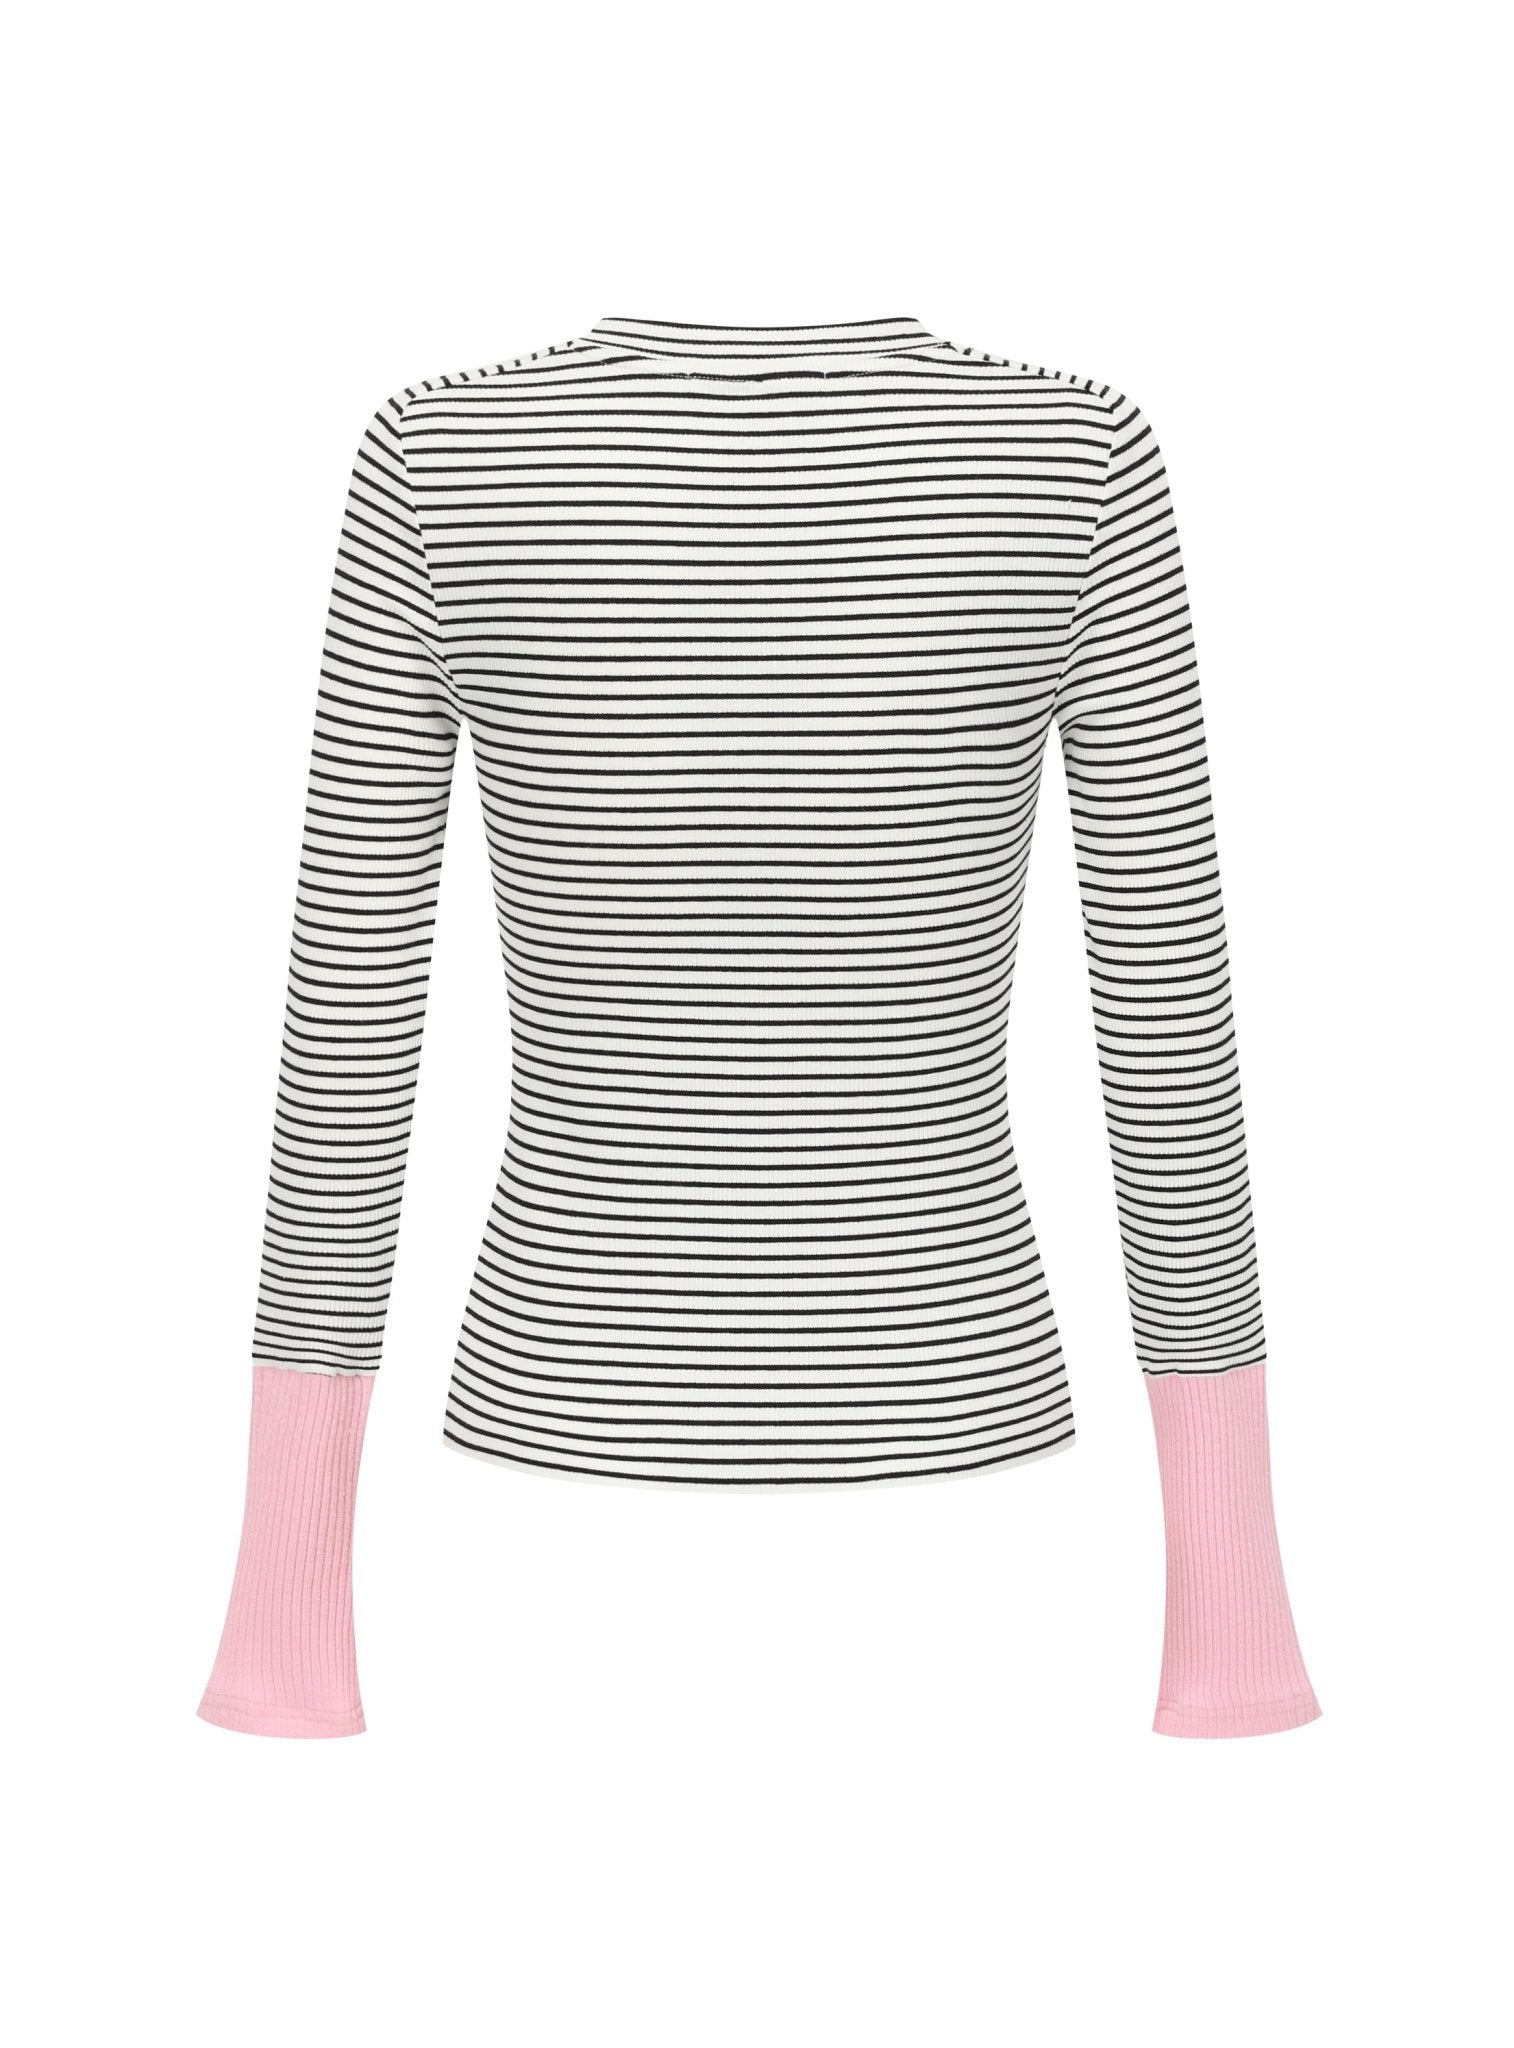 Alexia Sandra Pink Stripe Long-Sleeve T-Shirt | MADA IN CHINA